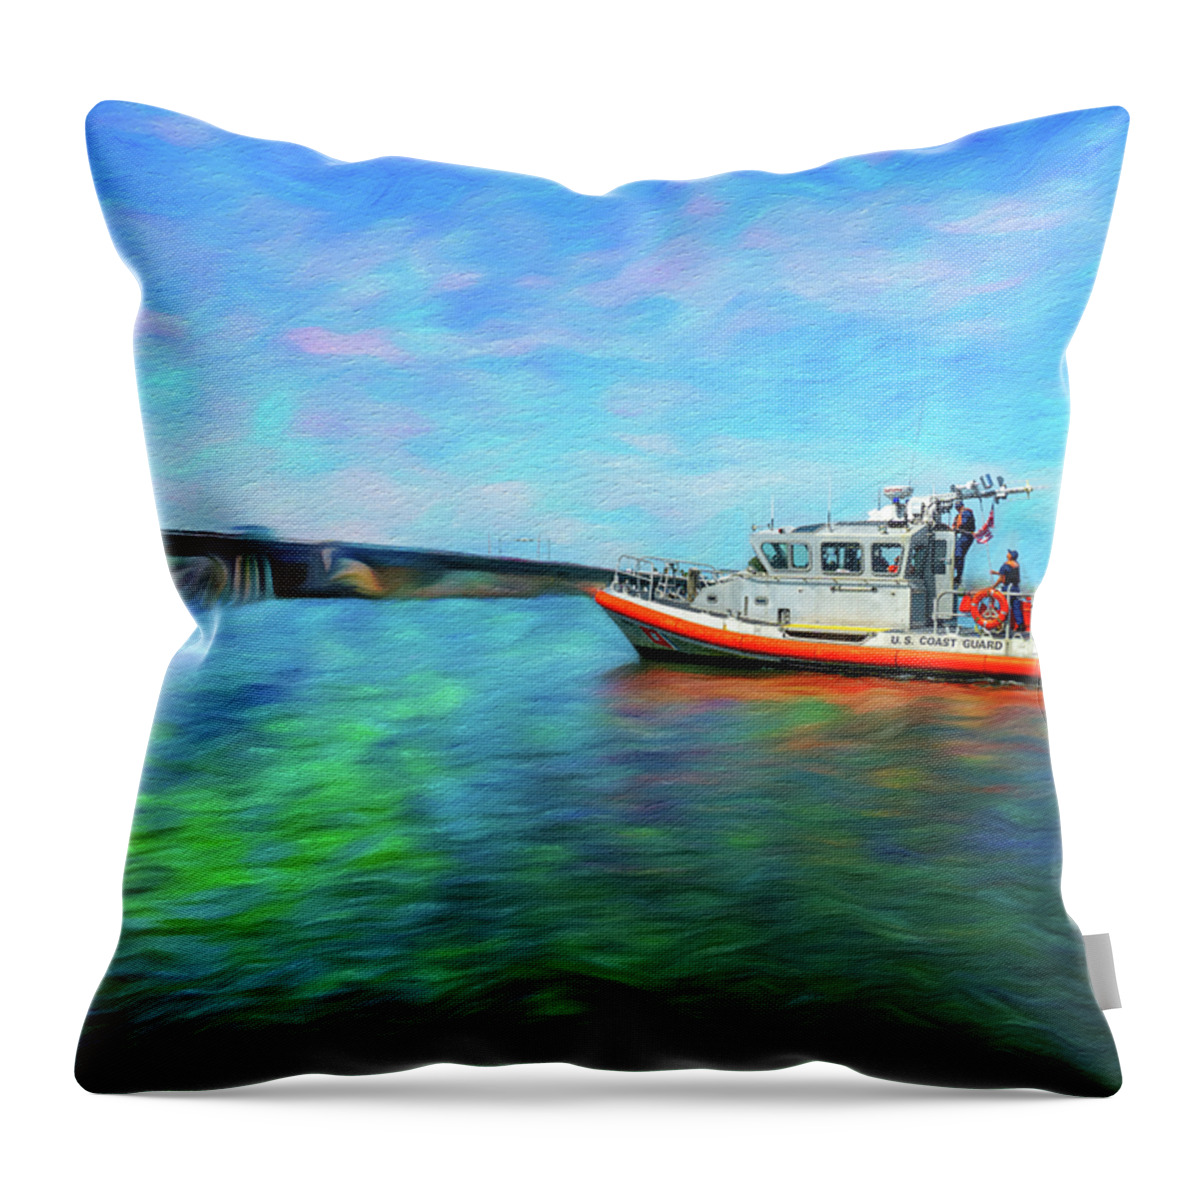 Us Coast Guard Throw Pillow featuring the photograph US CoastGuard Cortez DrawBridge 1596 by Rolf Bertram